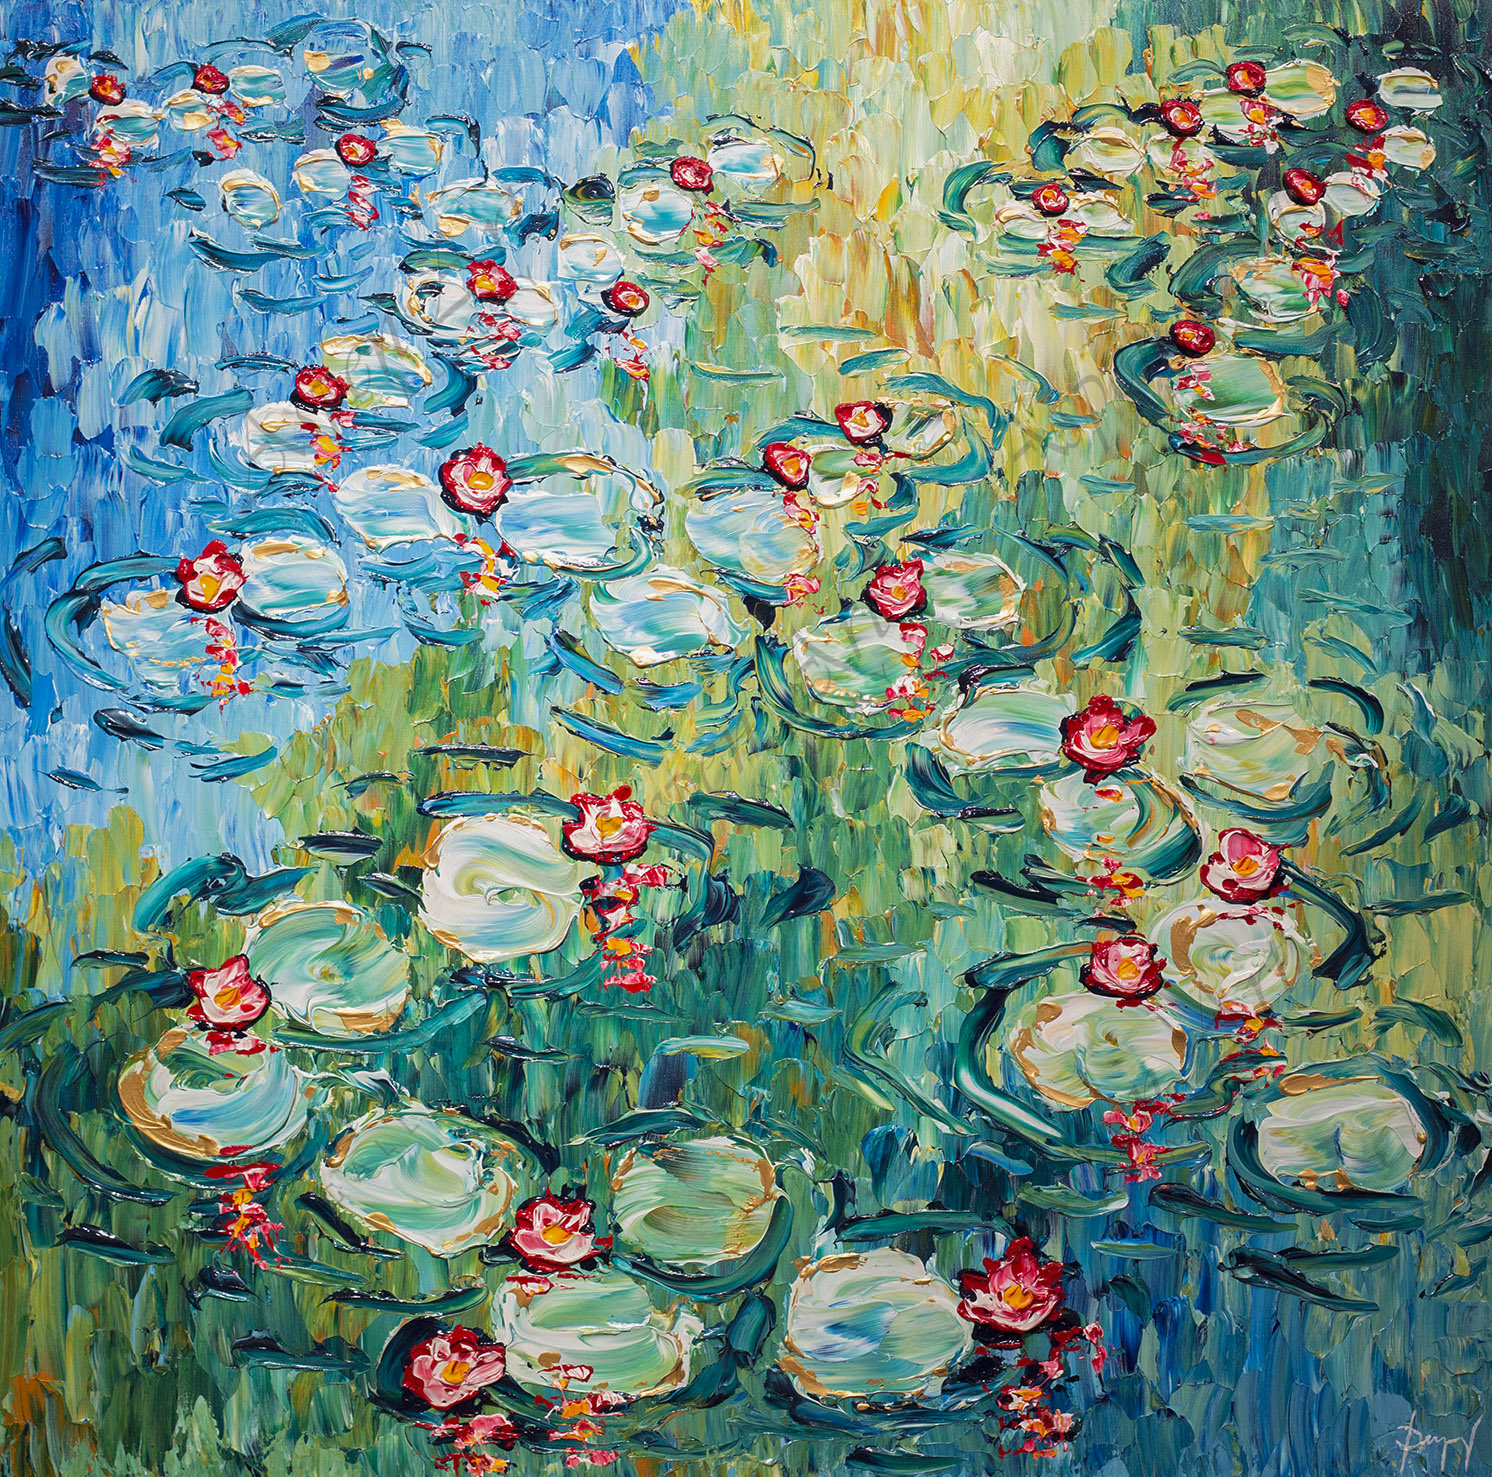 Graceful Water Lilies of Abundant Colors 48x48